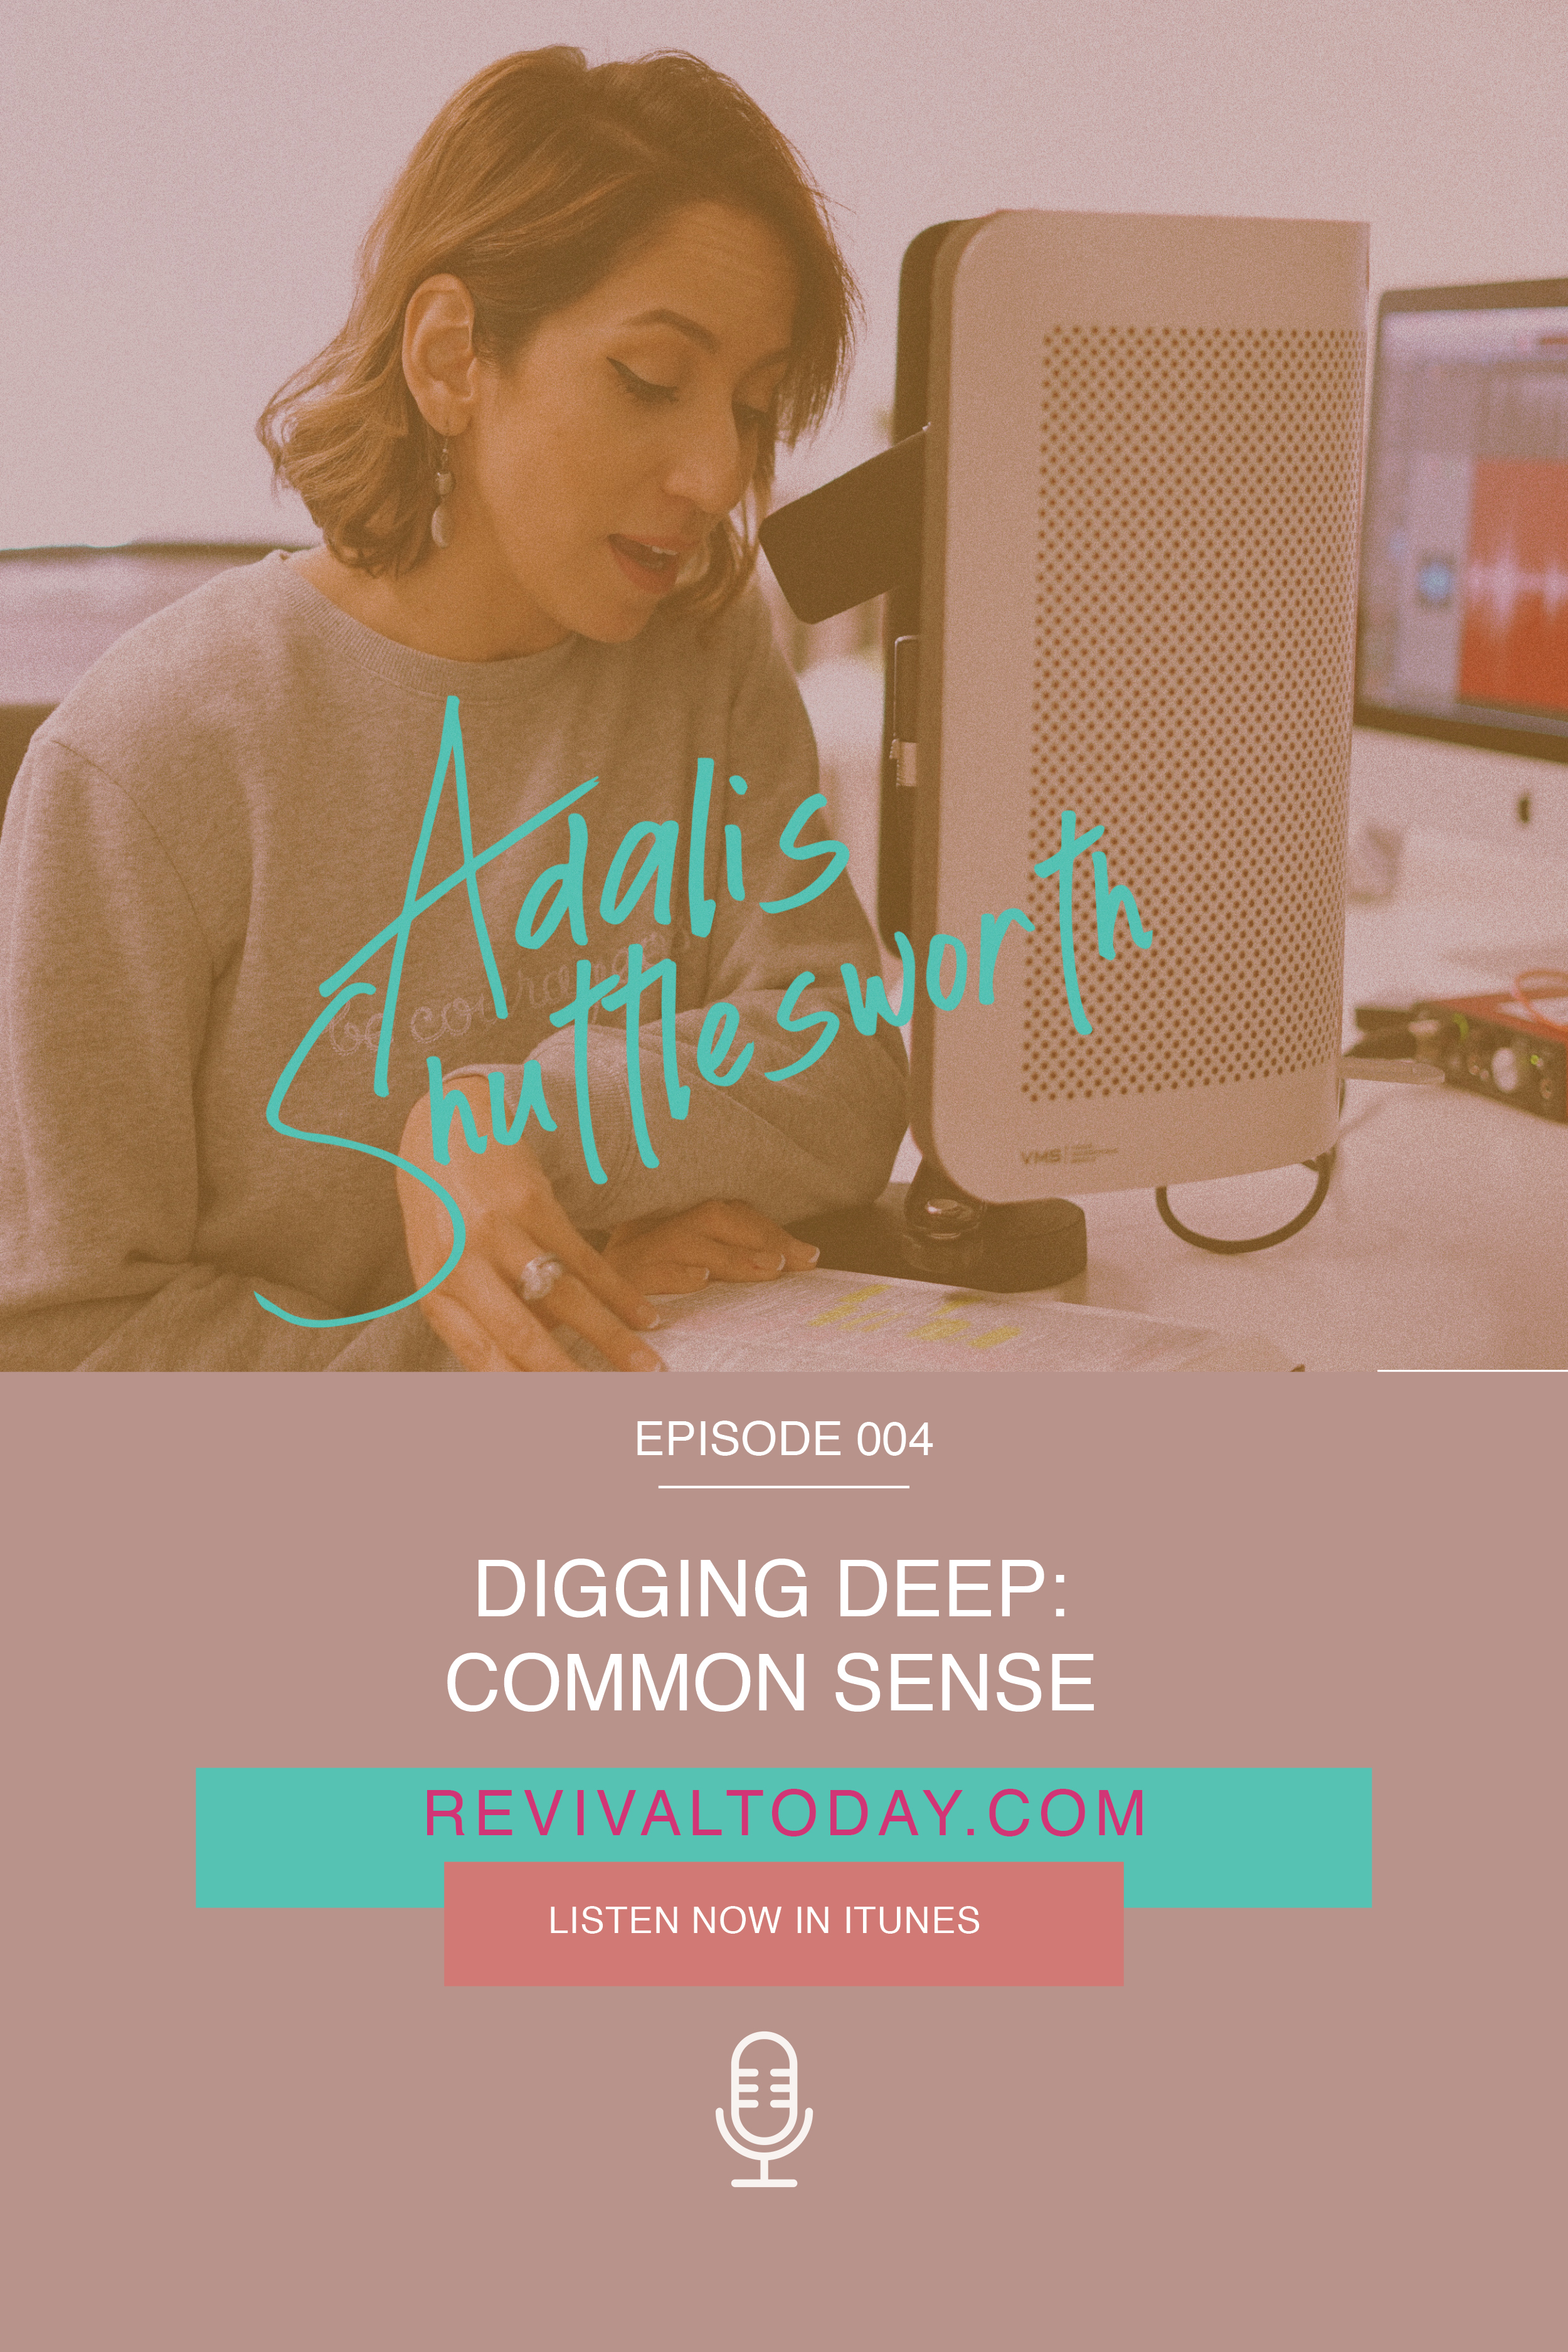 Digging Deep: Common Sense, Podcast with Adalis Shuttlesworth